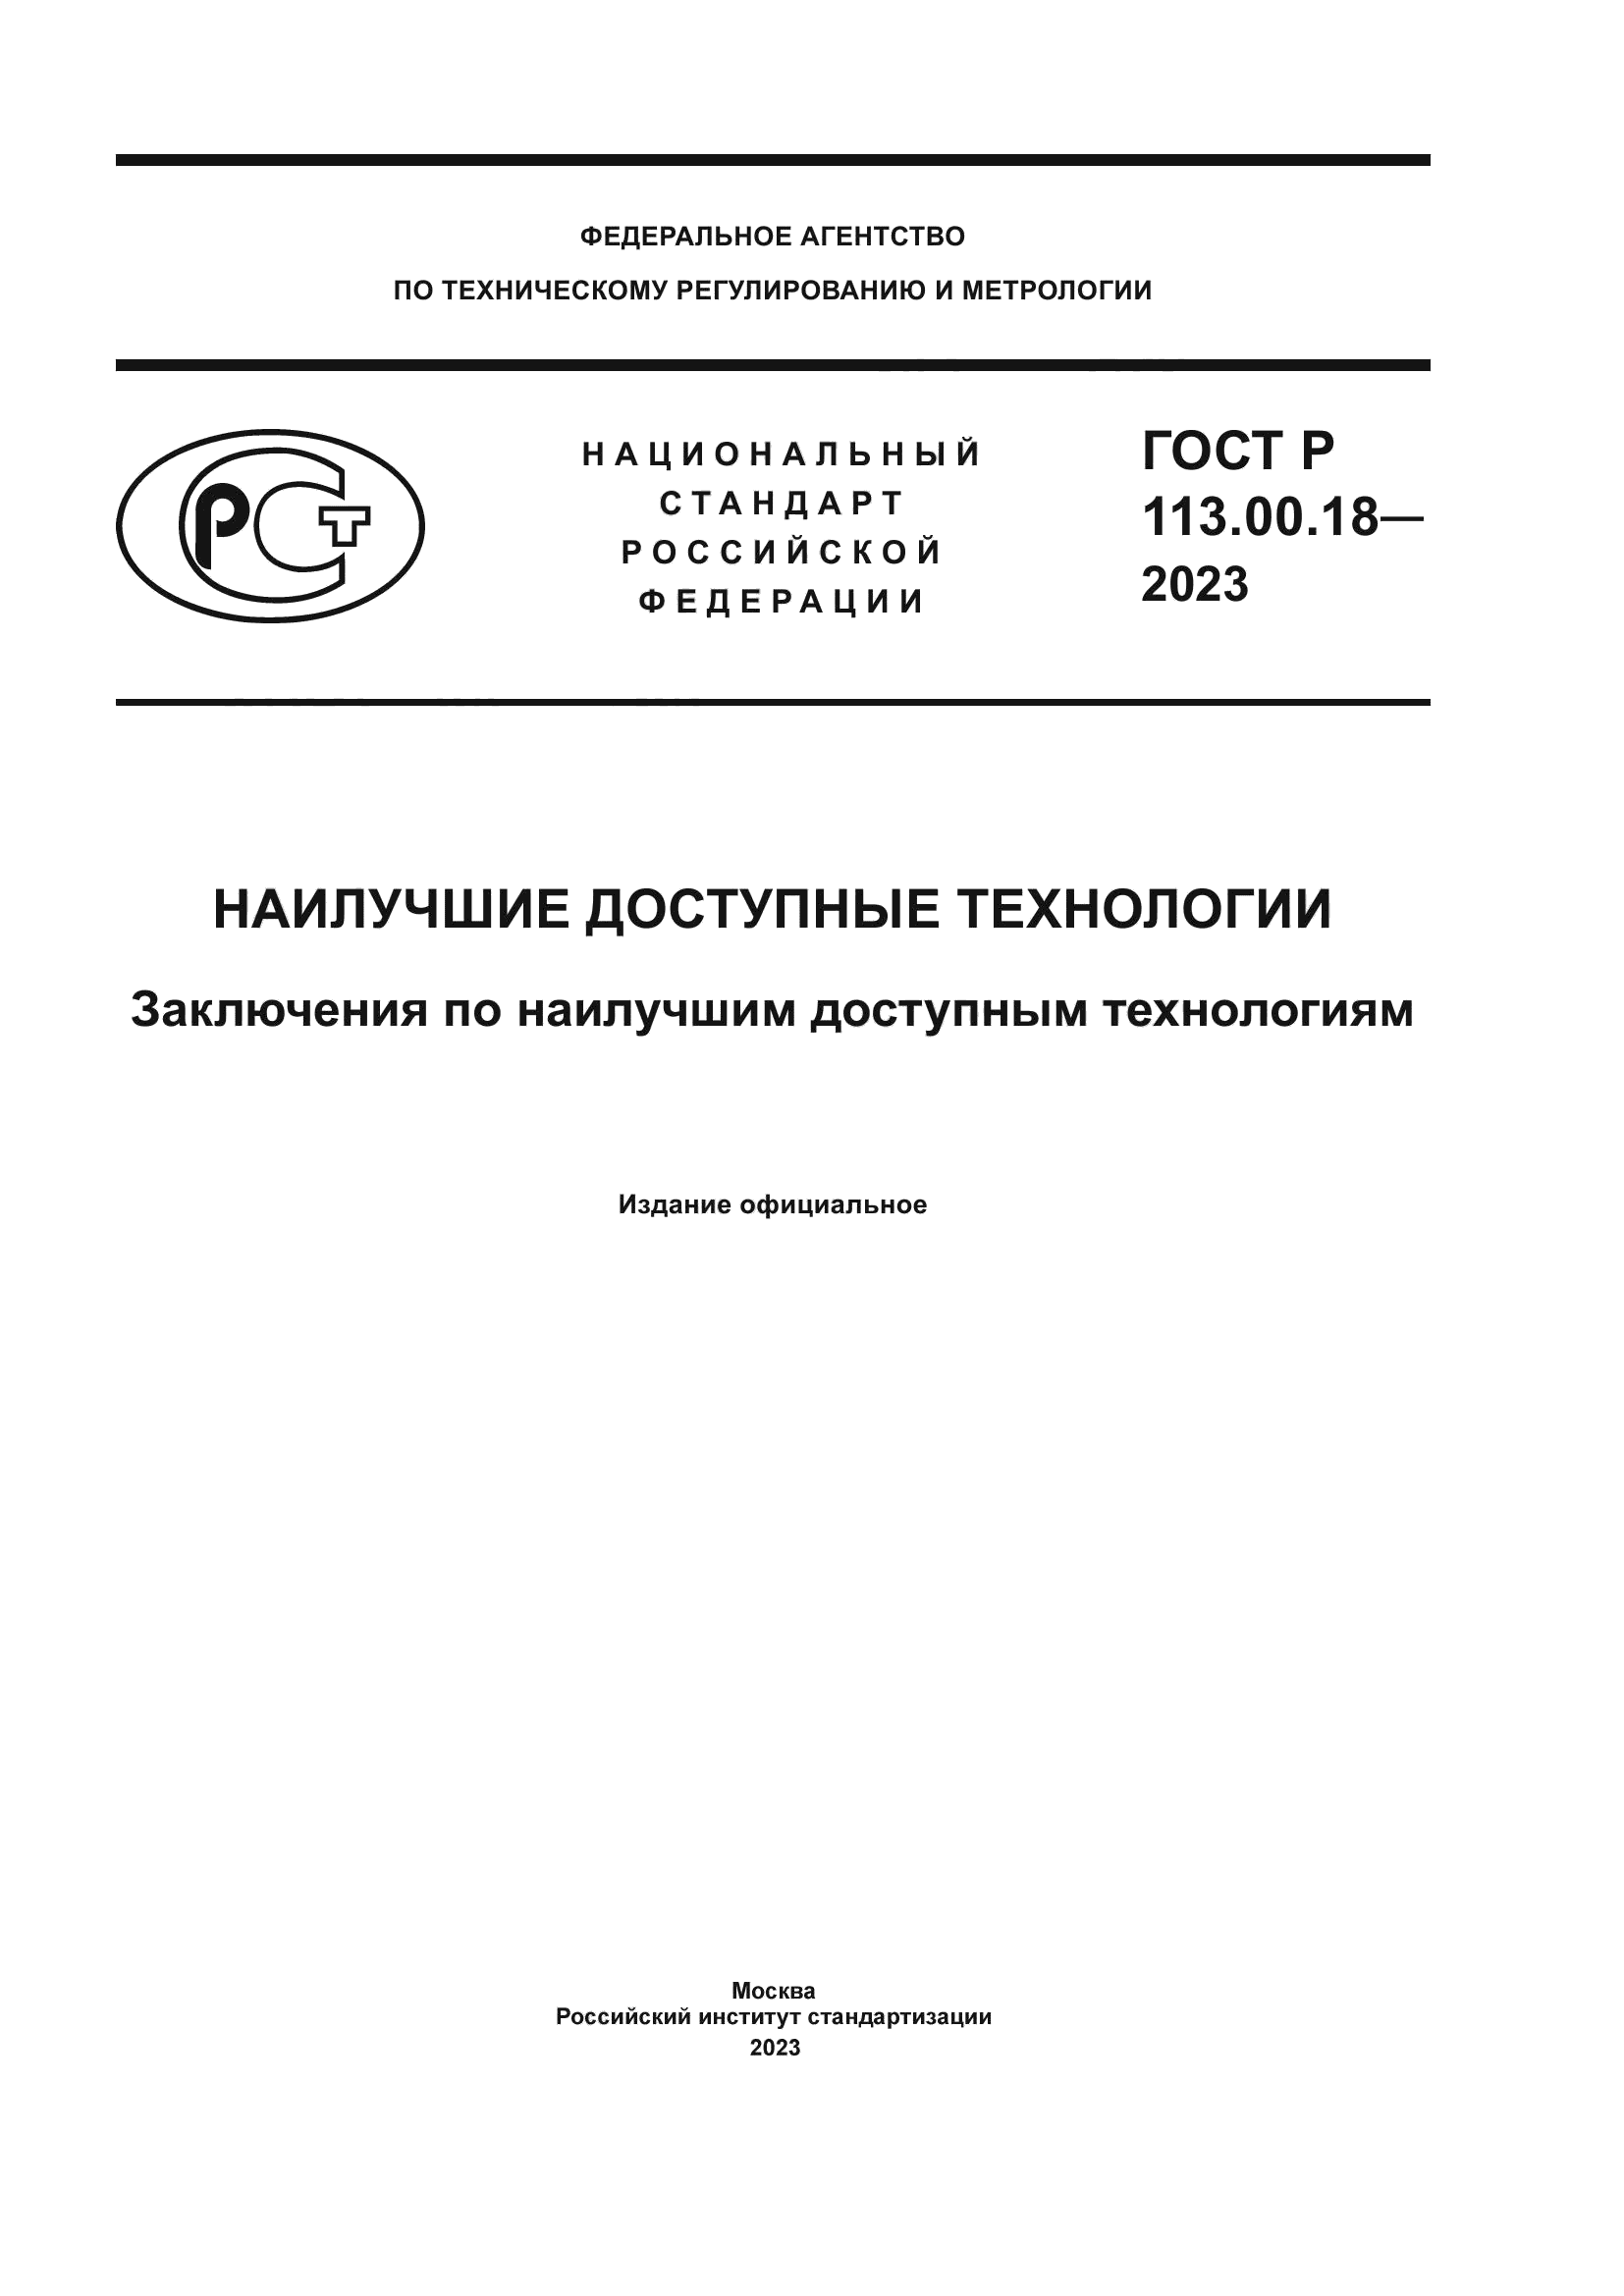 ГОСТ Р 113.00.18-2023